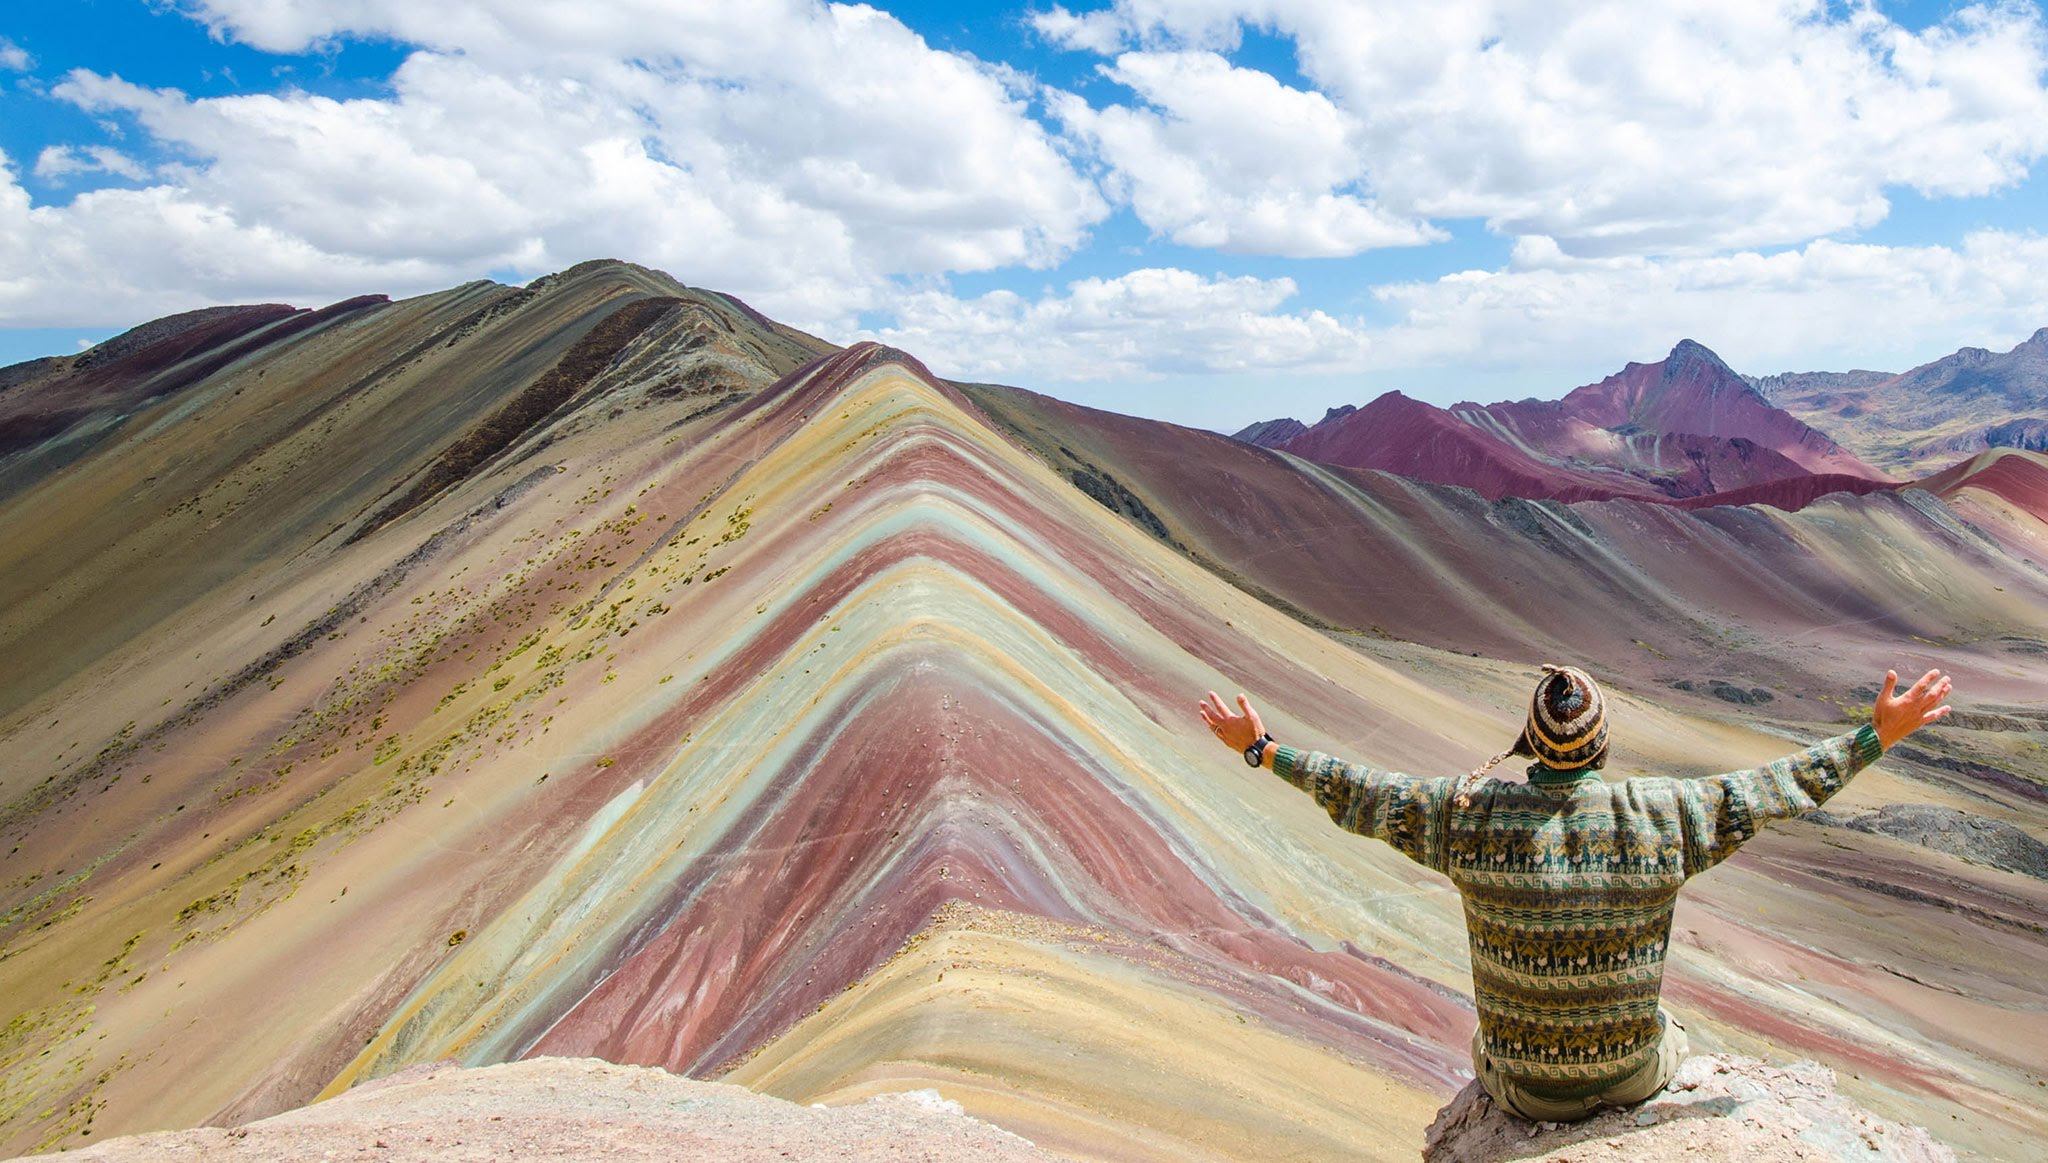 Rainbow Mountain, Peru - FlashpackerConnect - YouTube